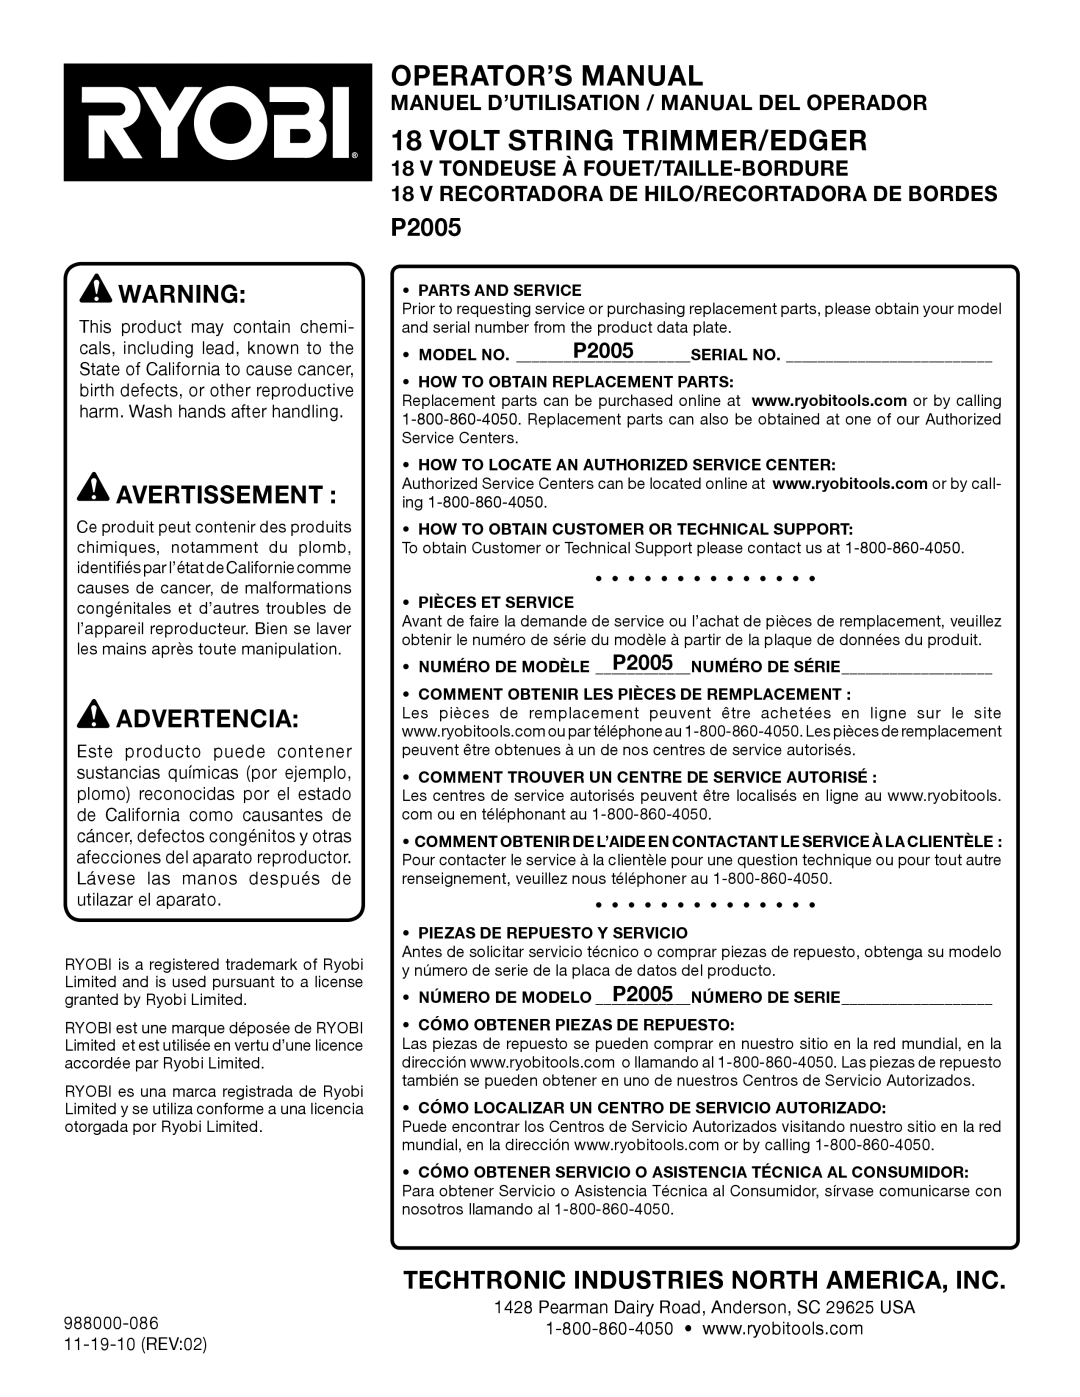 Ryobi P2005 manuel dutilisation Operator’S Manual, Volt String Trimmer/Edger, Avertissement , Advertencia 